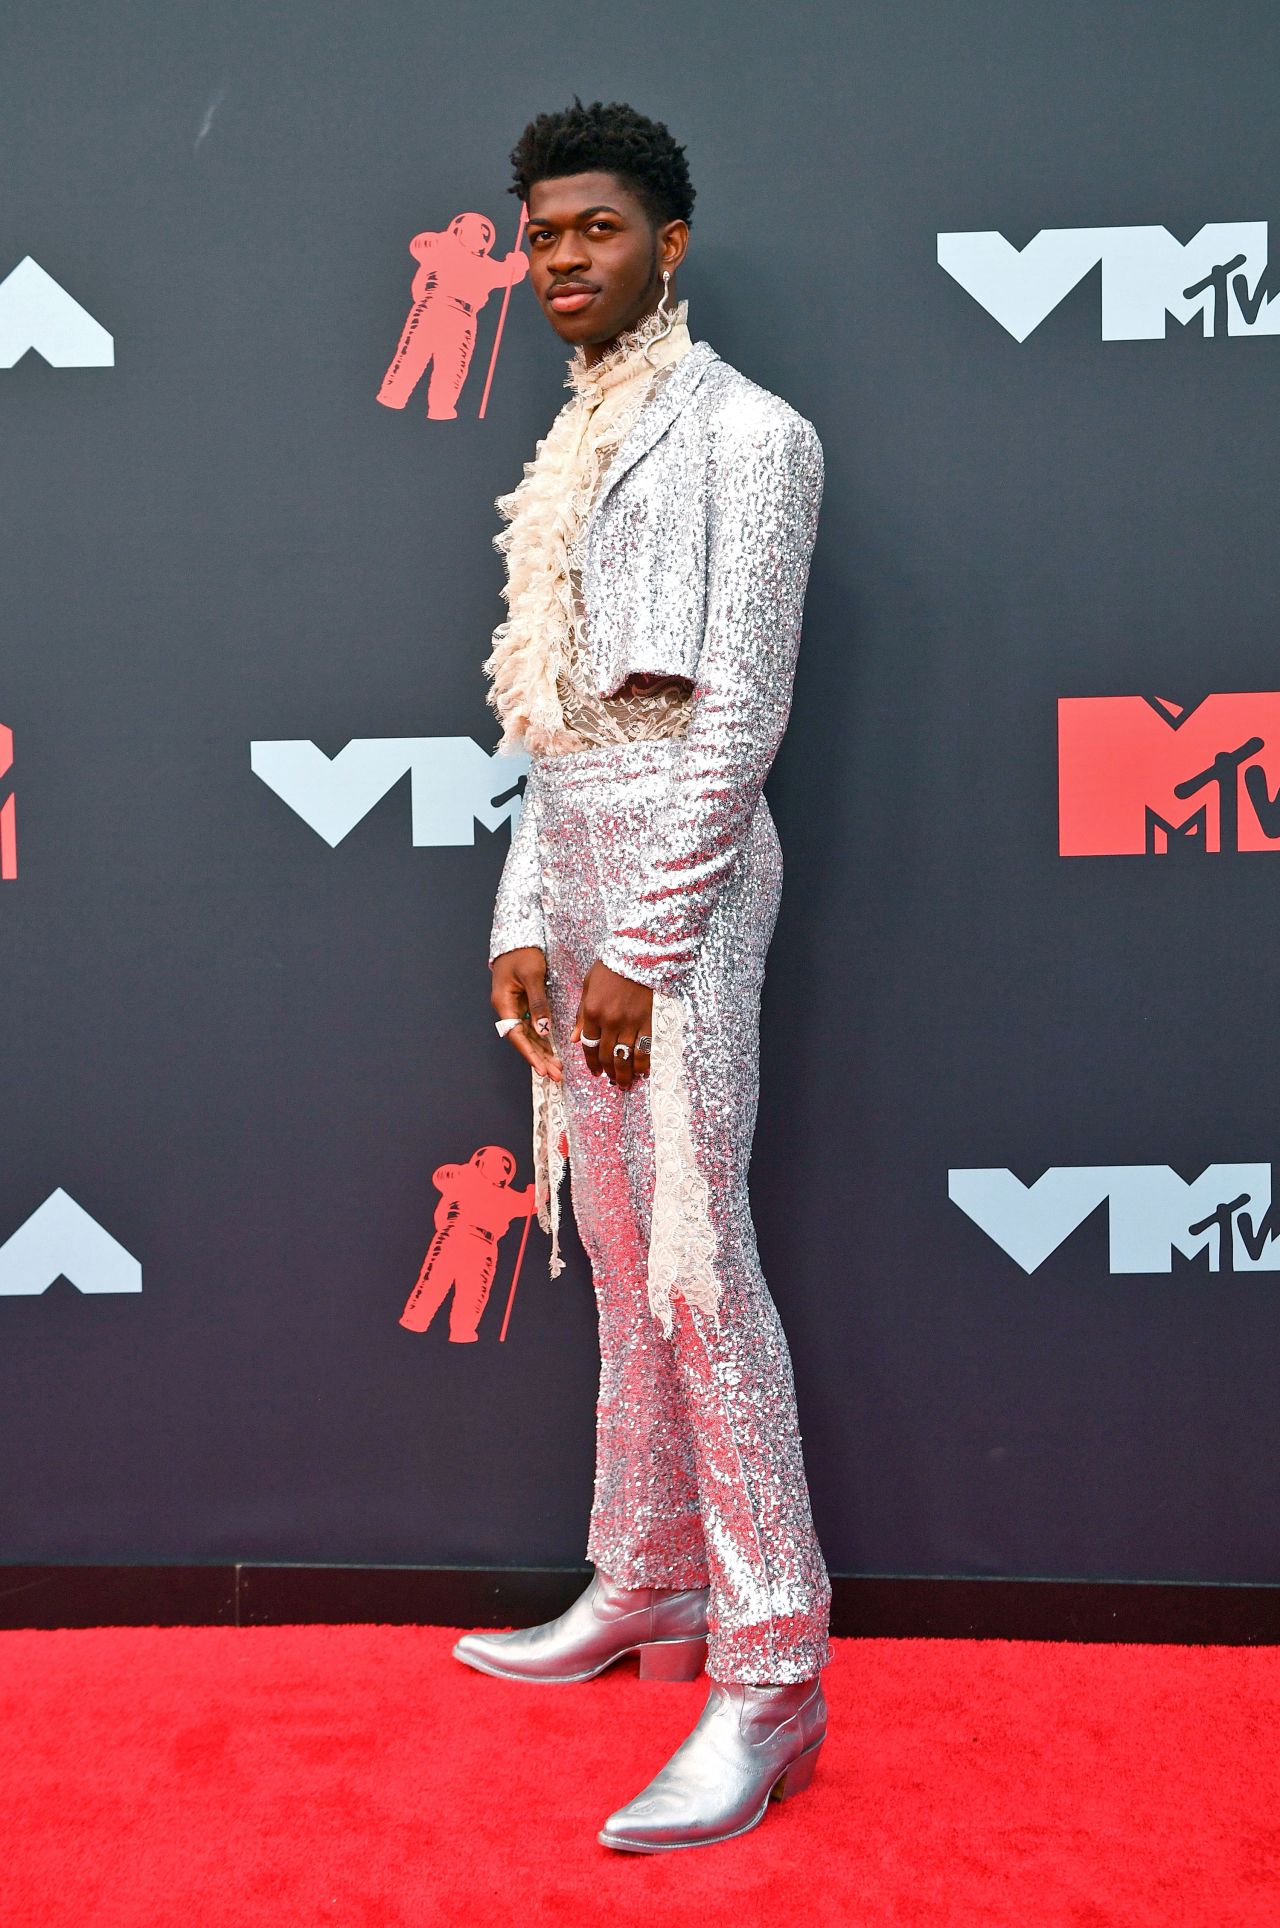 VMAs 2019: Best looks from the red carpet | CNN